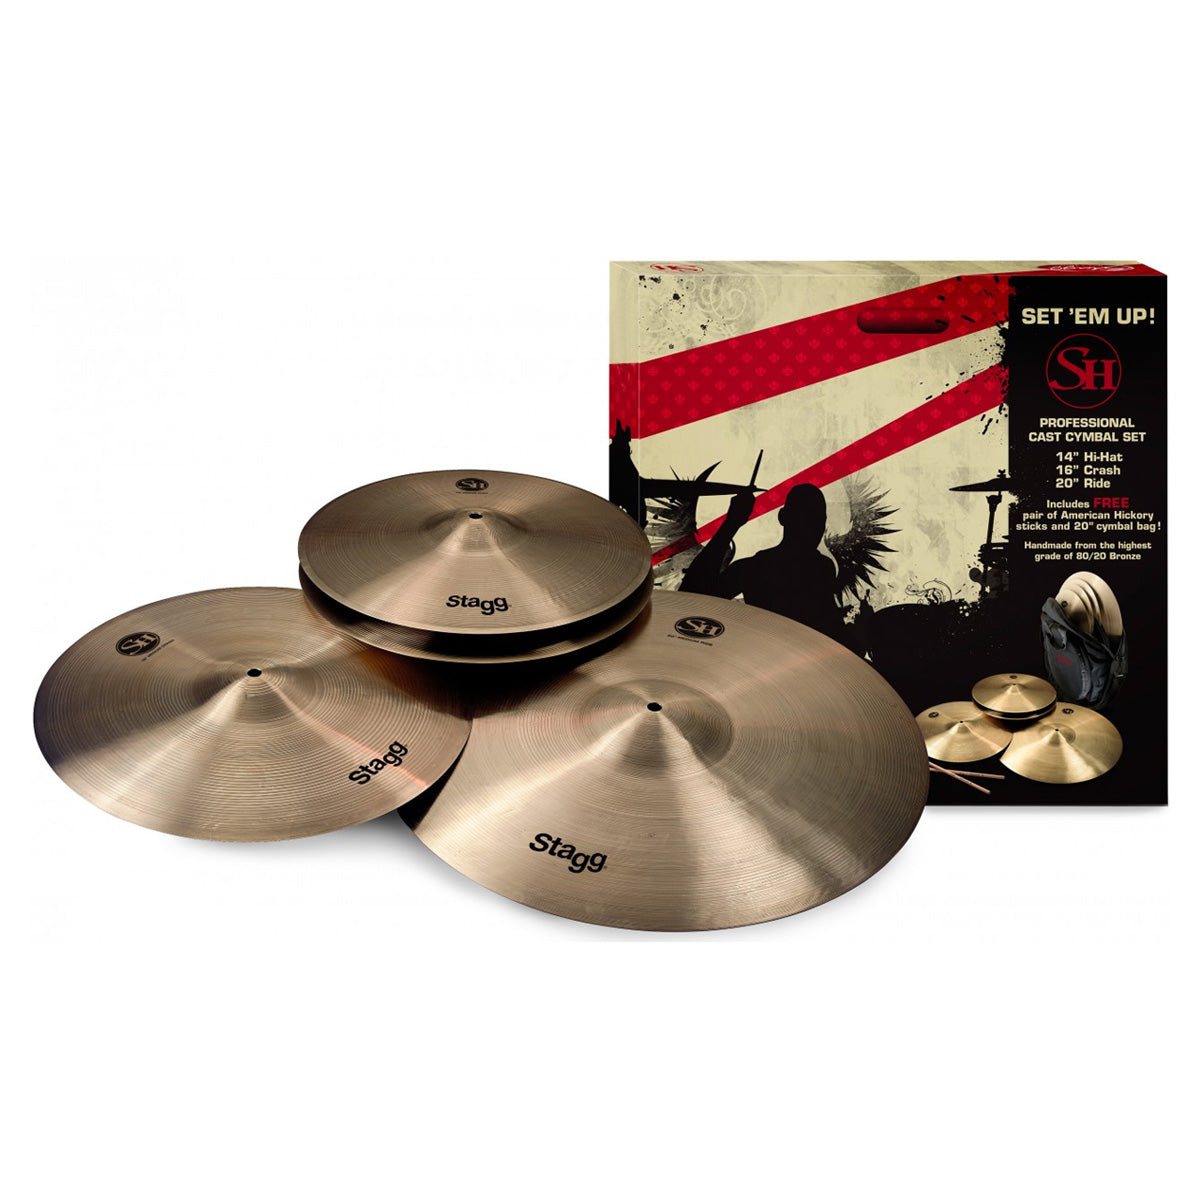 Stagg SH Series Cymbal Box Set